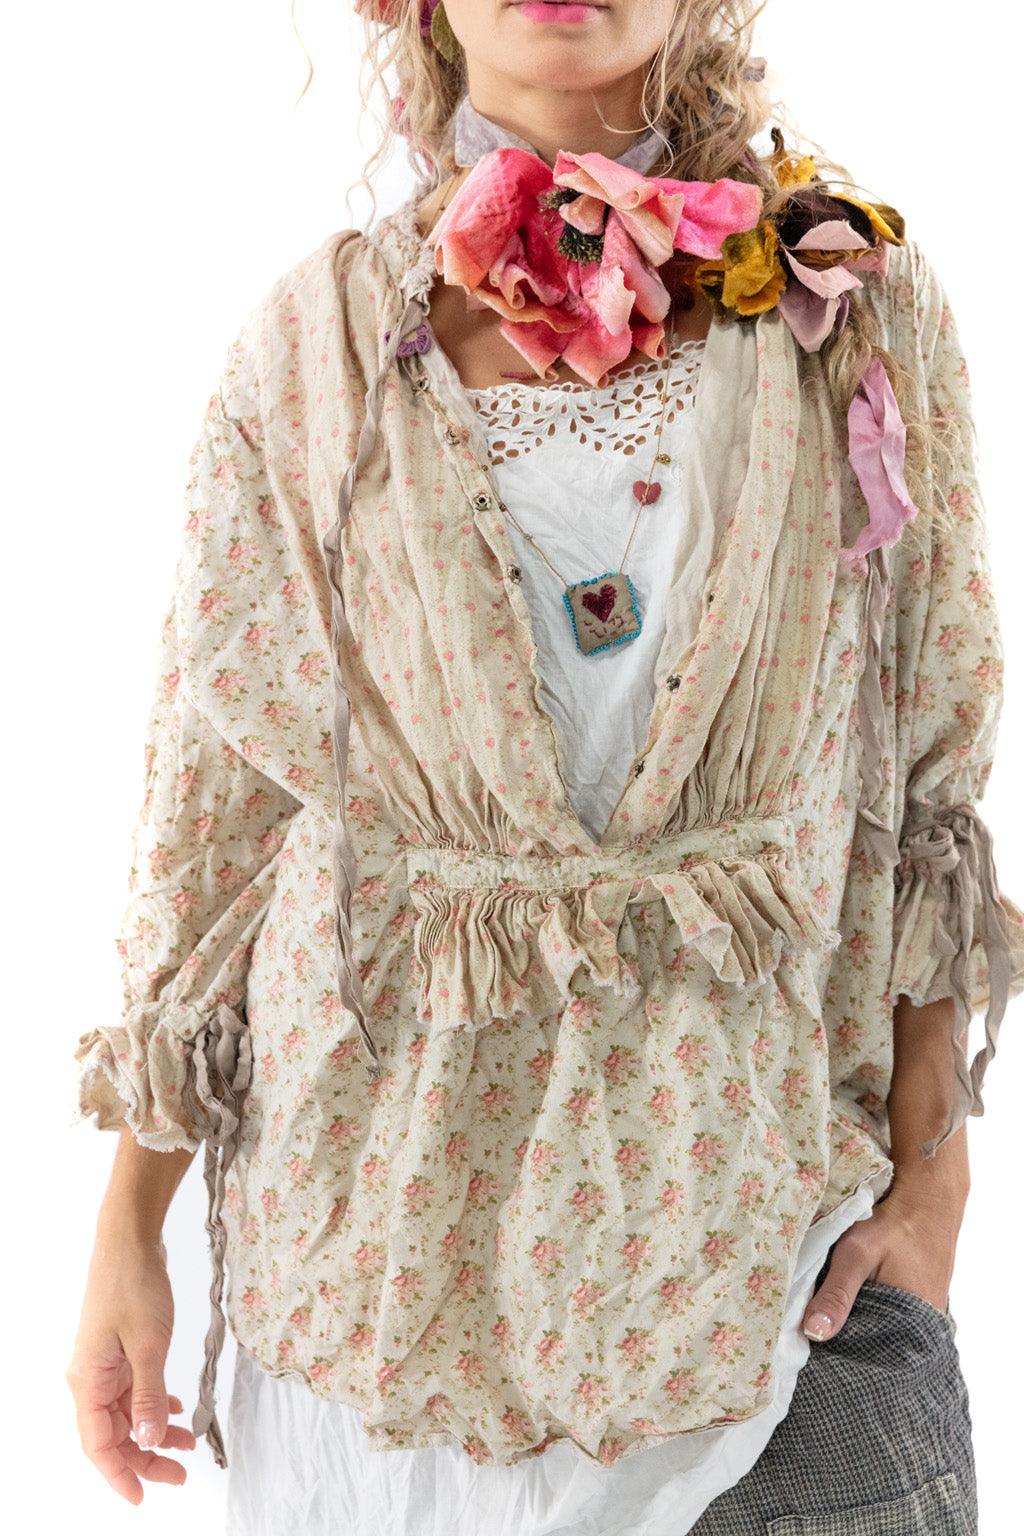 Floral Amadeus Blouse - Magnolia Pearl Clothing